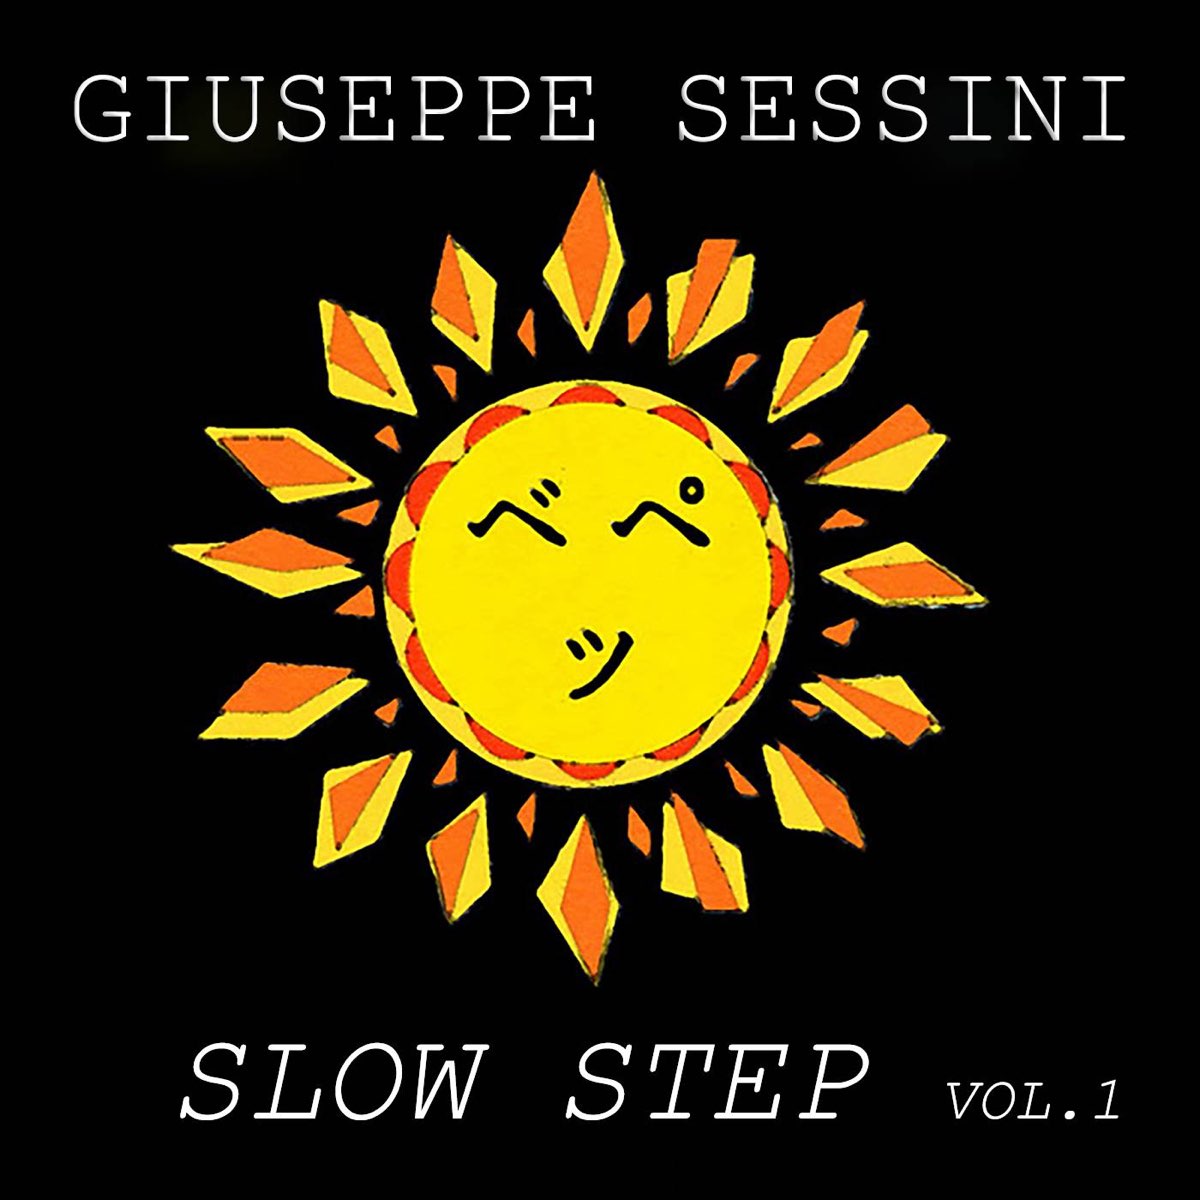 Slow step. Step slowly. DJ Stella Bossie. 1:16 / 5:20 4 Parole (Giuseppe Sessini Remix).